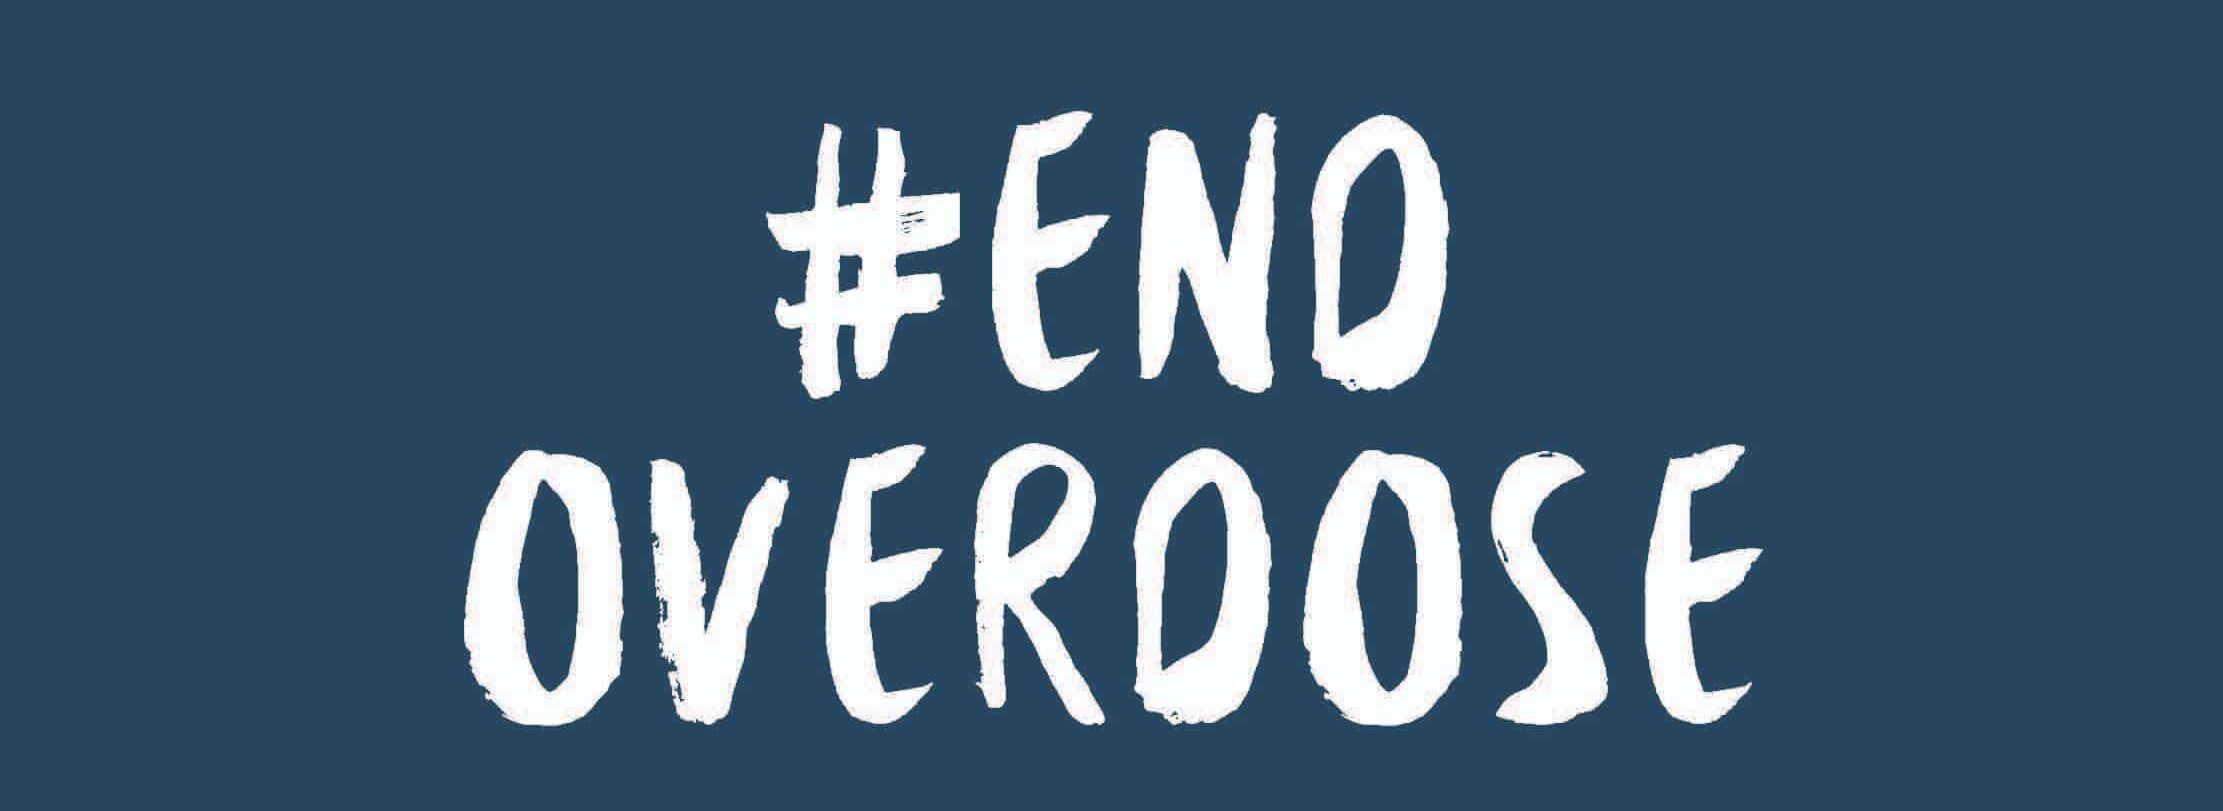 International Overdose Awareness Day - August 31, 2022